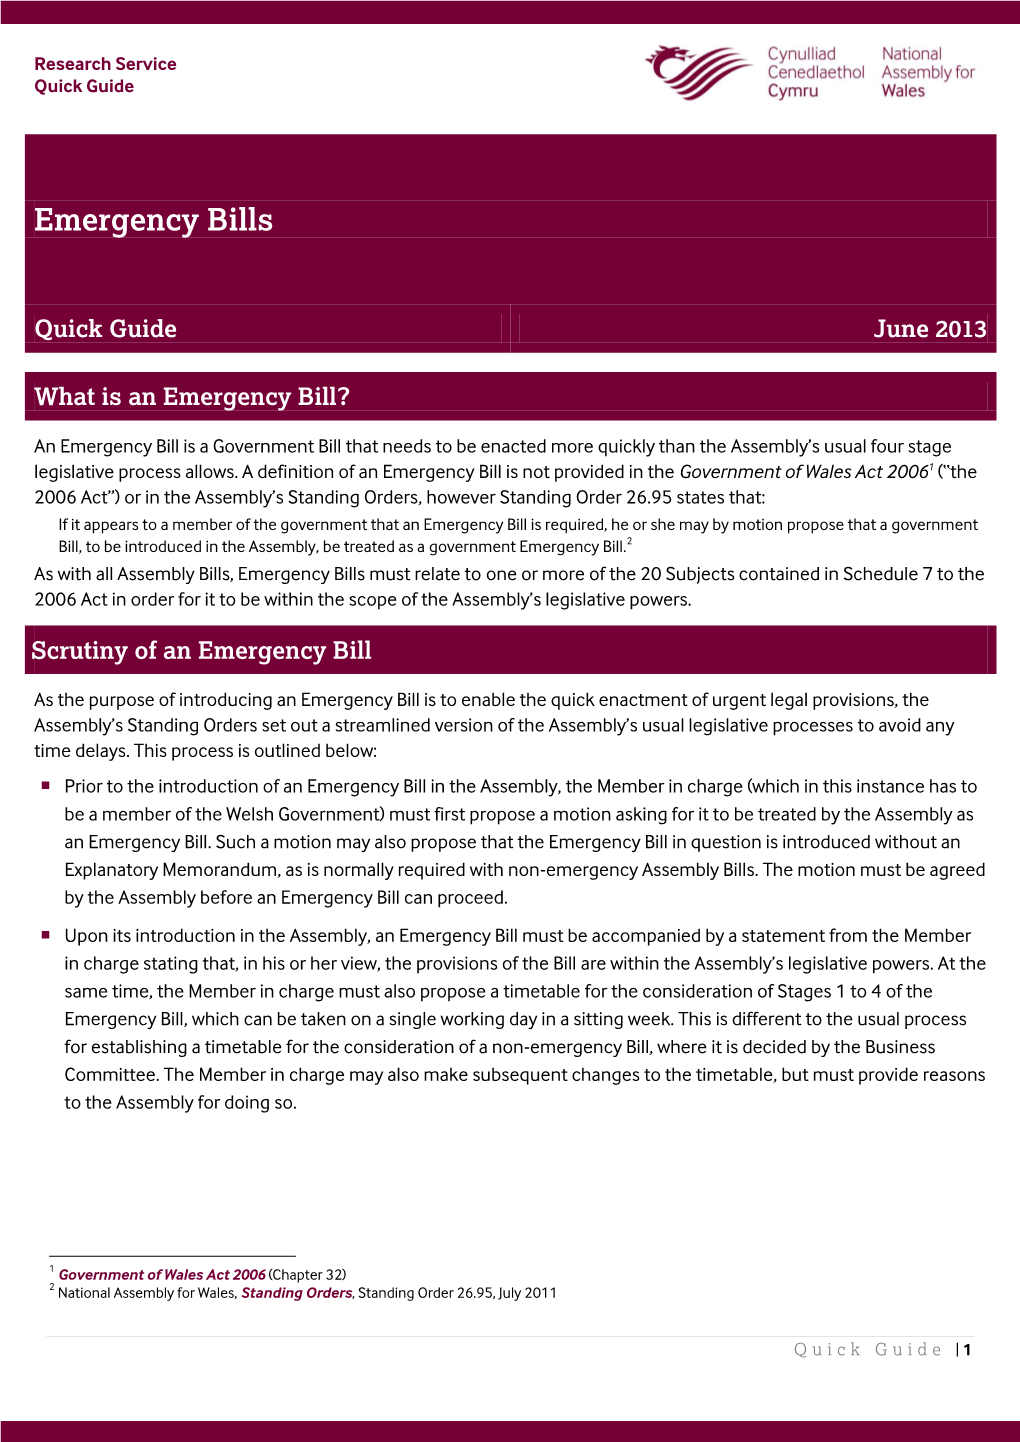 Emergency Bills